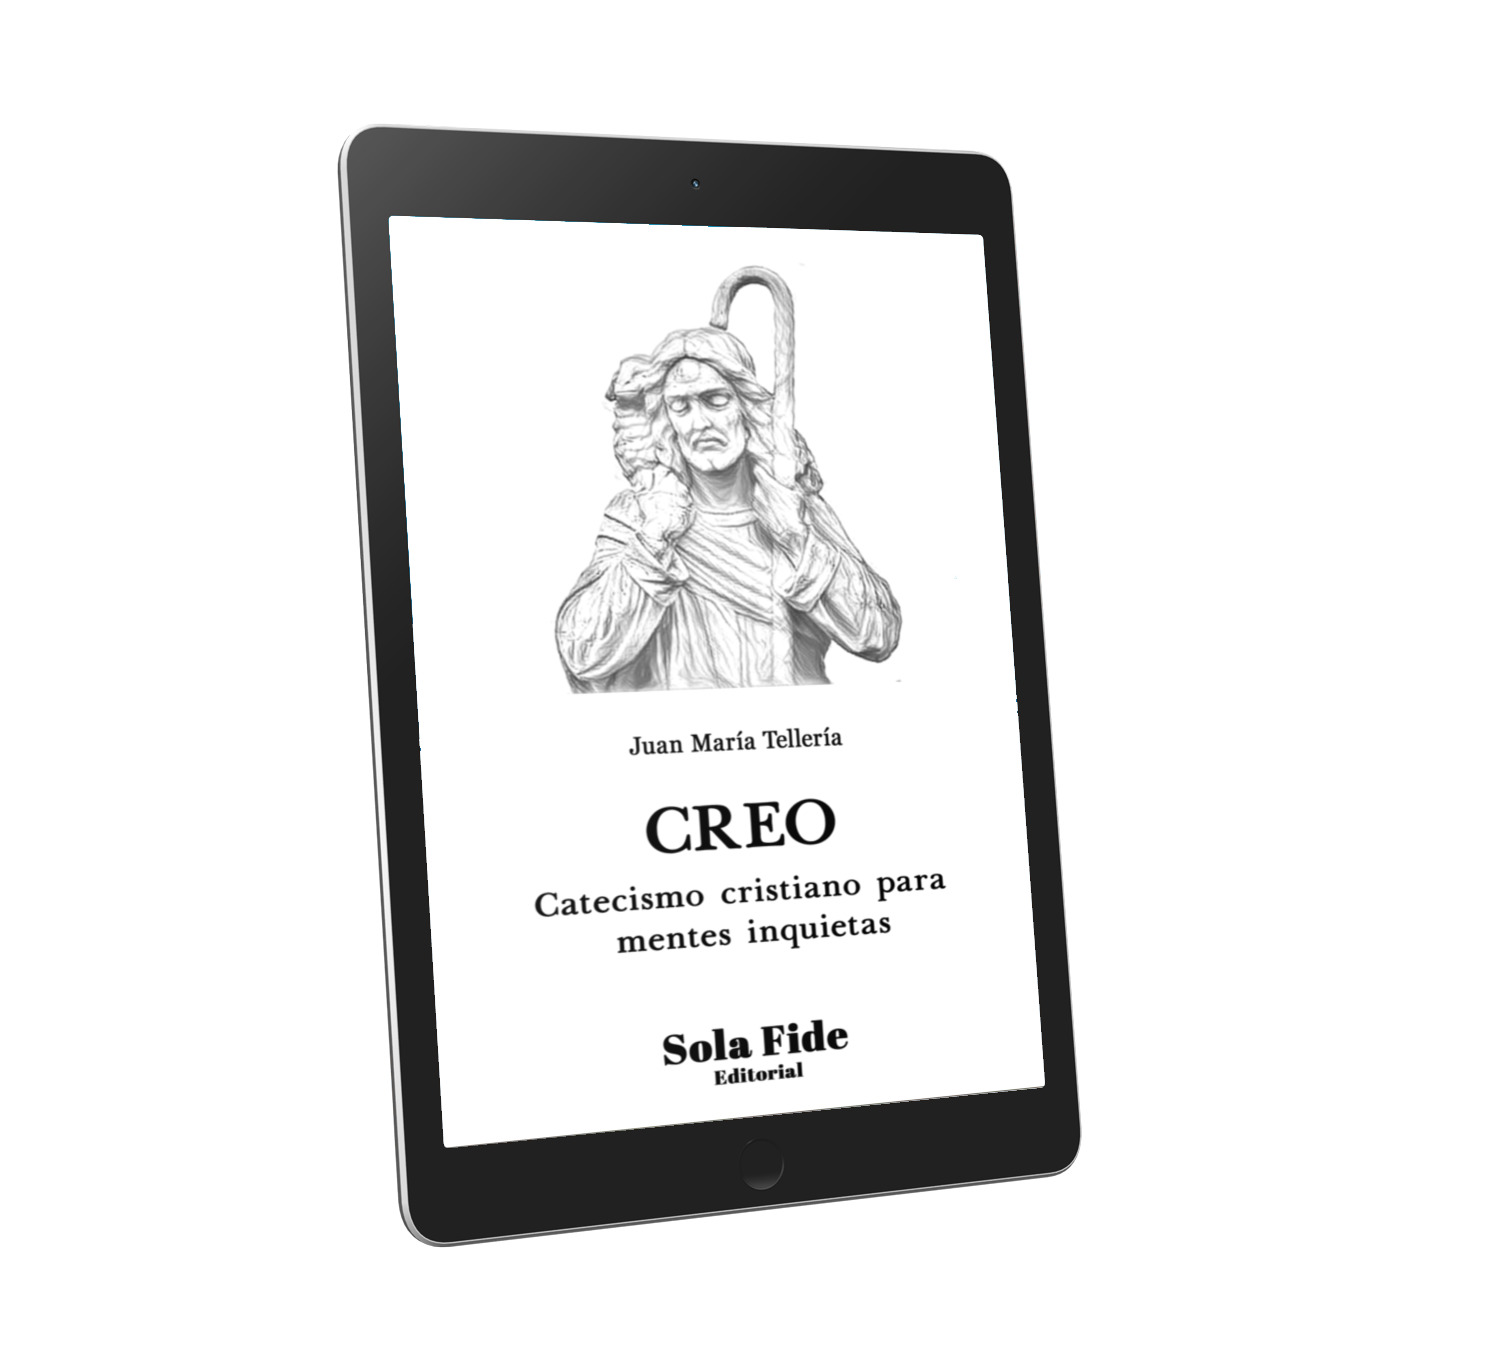 Creo (Ebook)